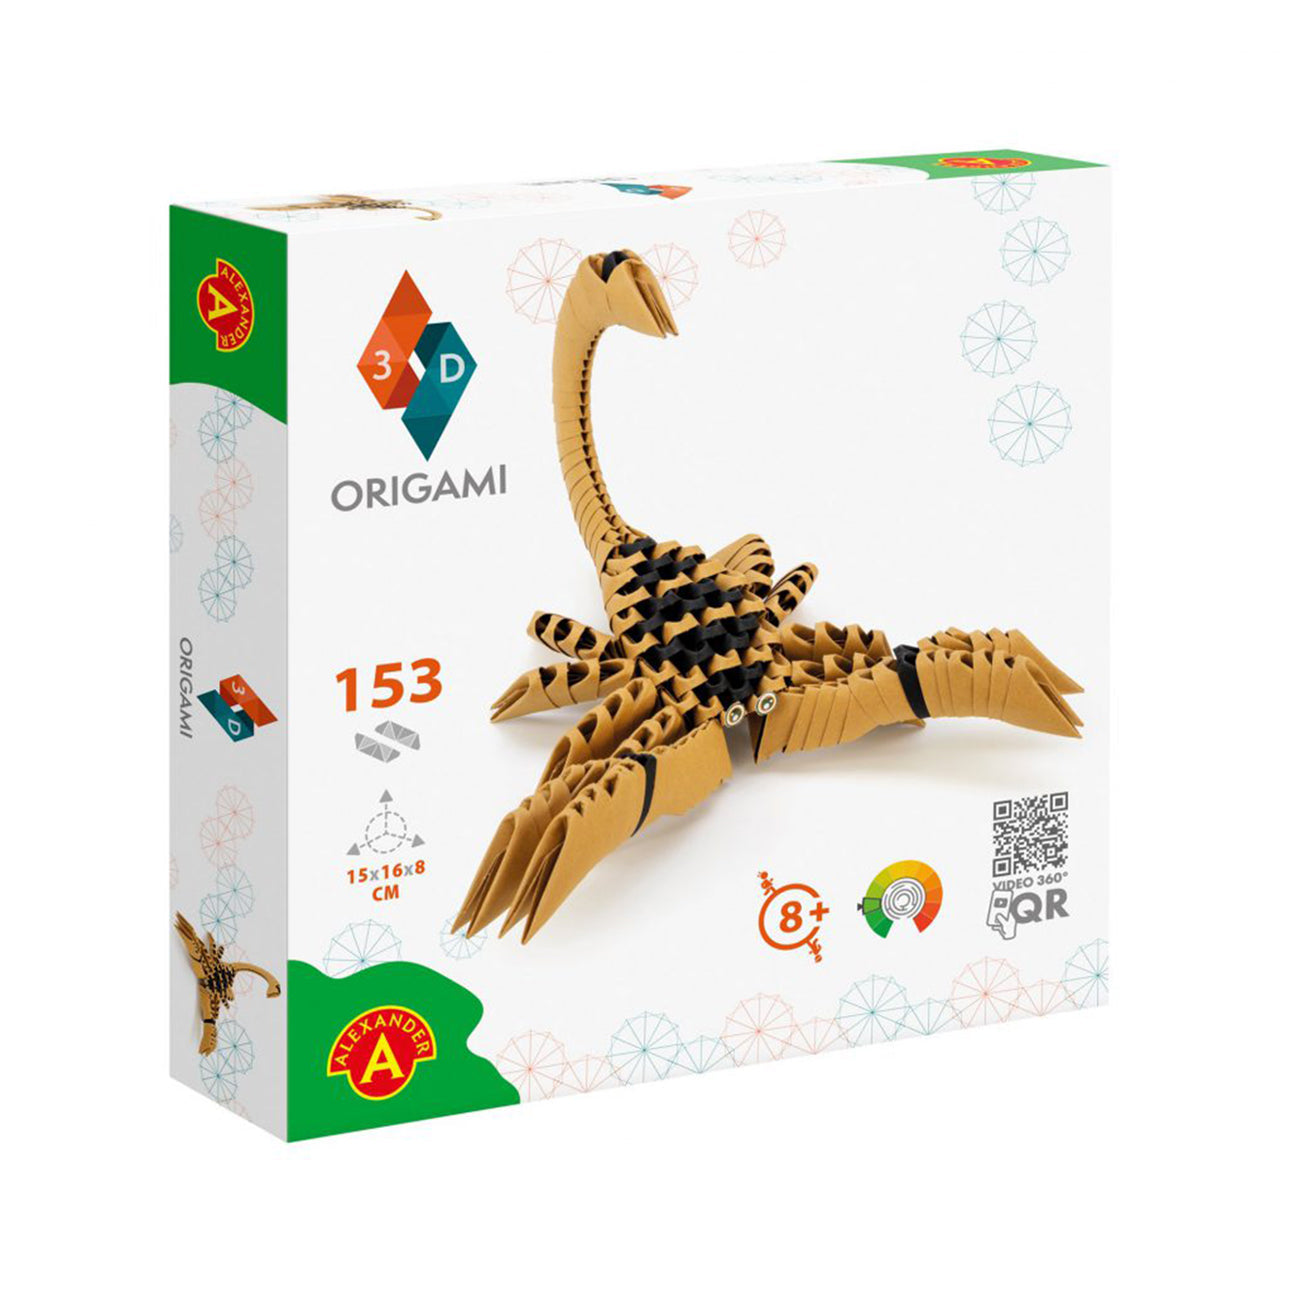 Kit Origami 3D Scorpion +8 ani @ Alexander Games